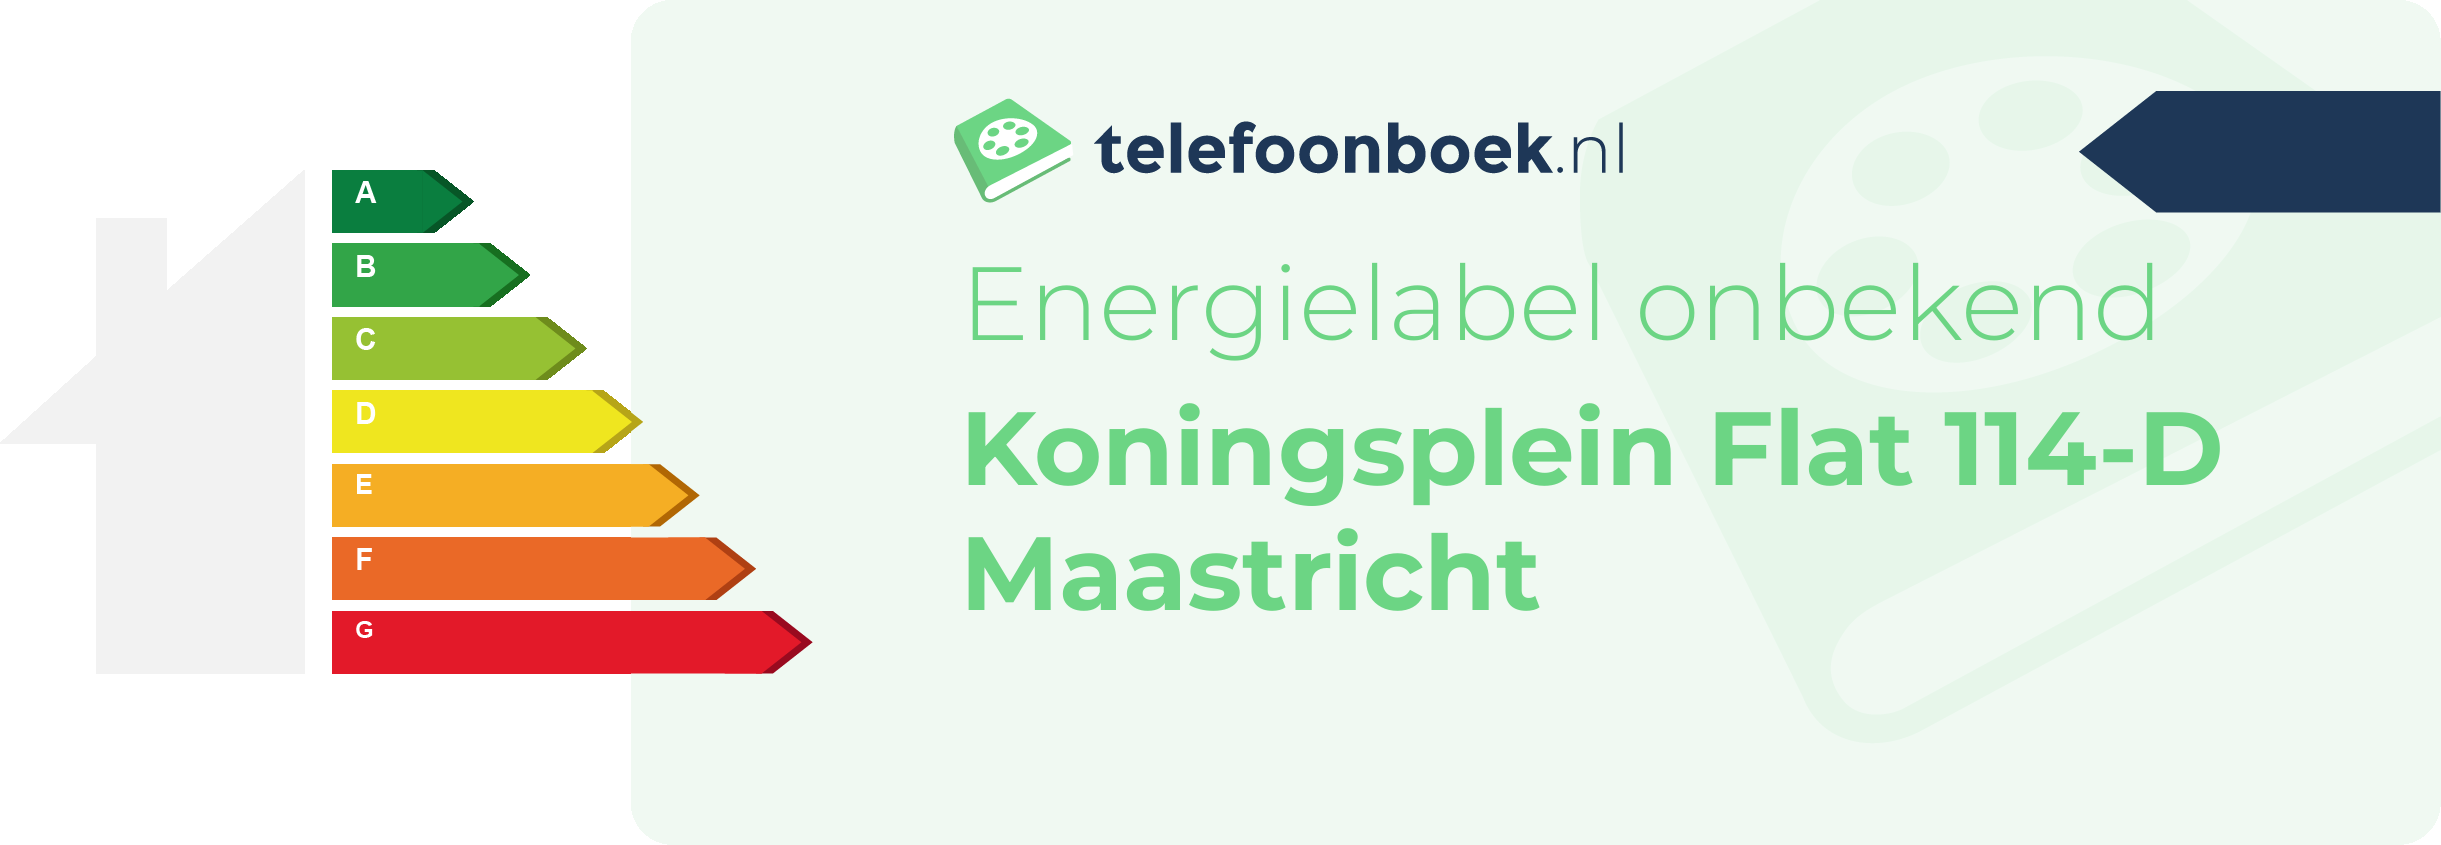 Energielabel Koningsplein Flat 114-D Maastricht